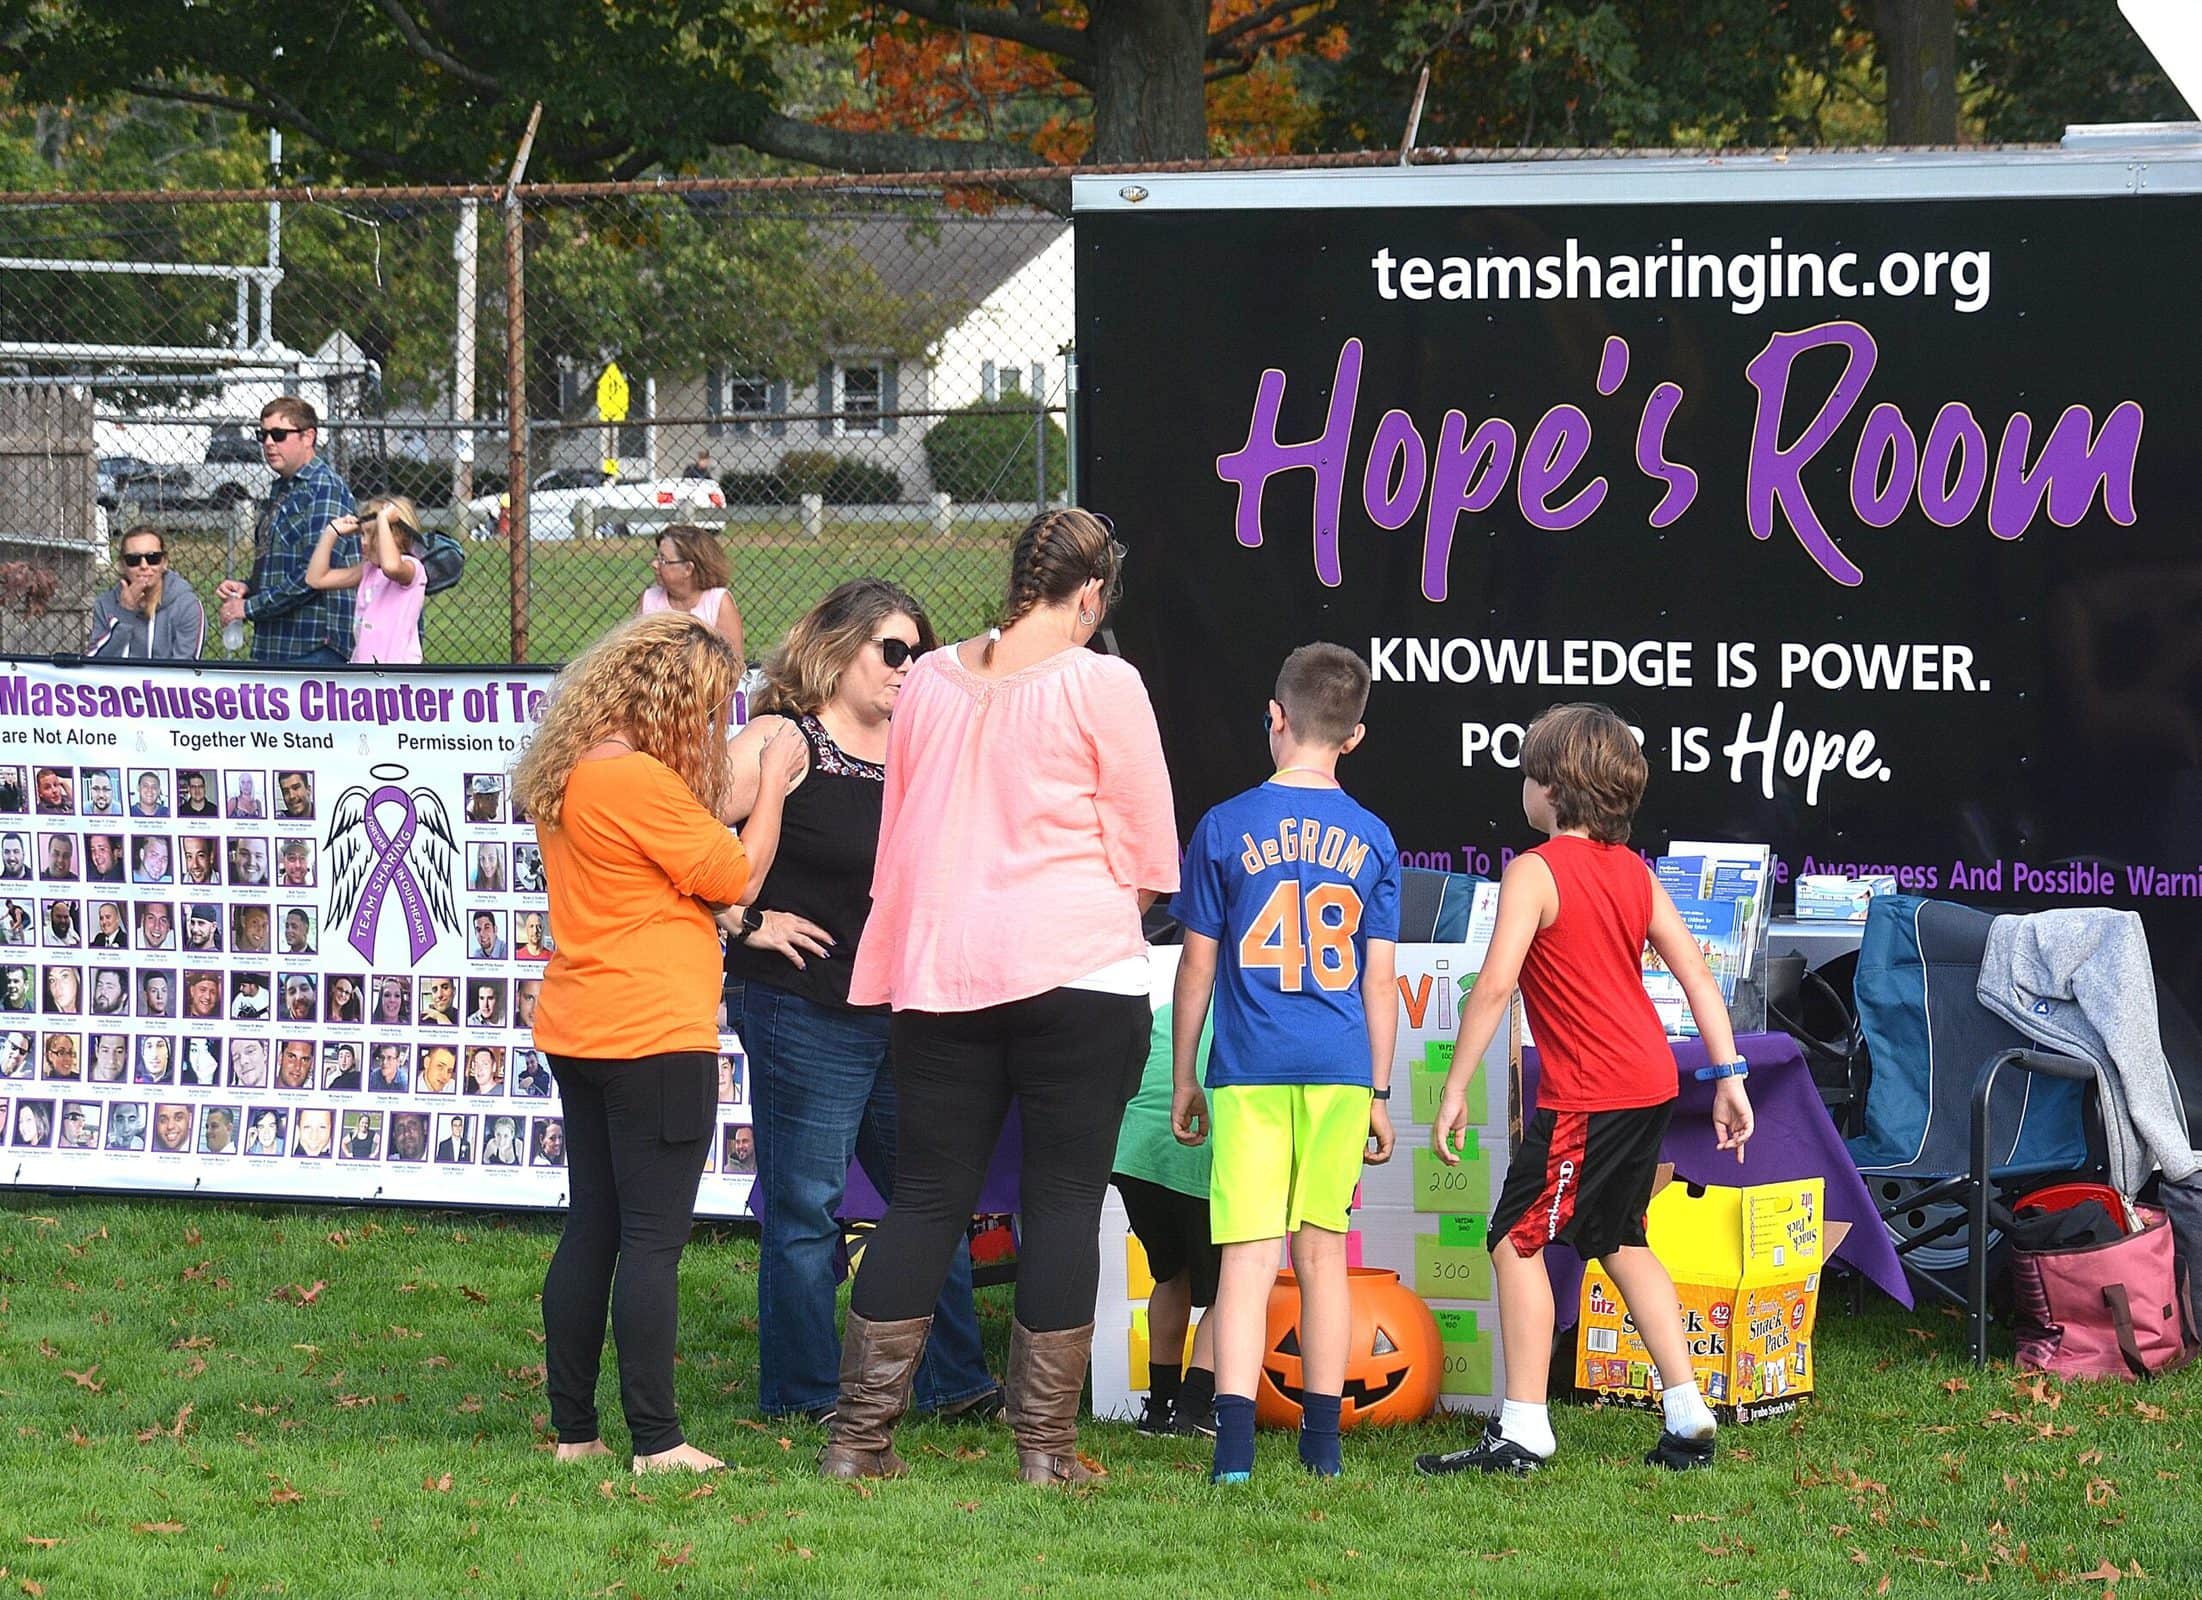 Hudson marks its 23rd fall community festival